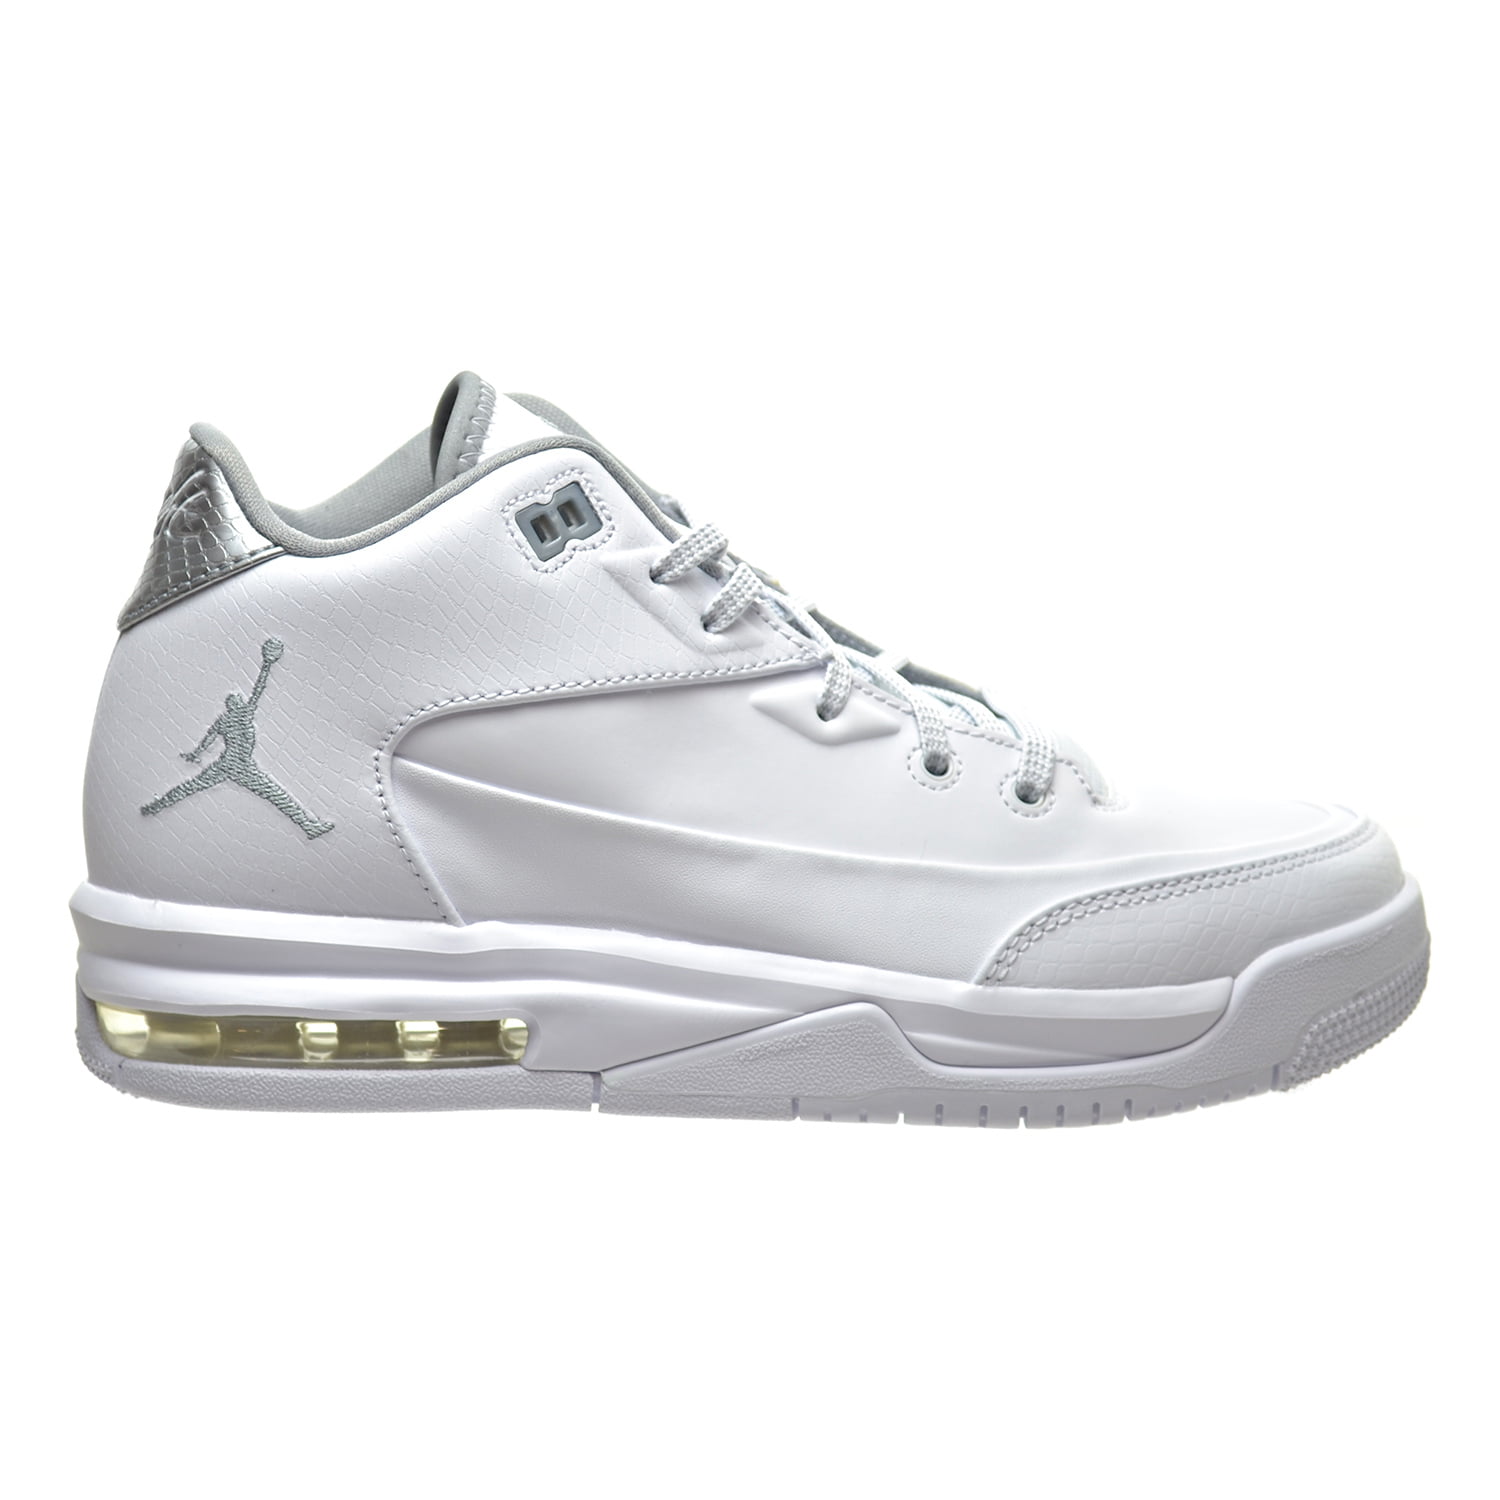 Seguro por favor confirmar Discriminatorio Jordan Flight Origin 3 BG Big Kid's Shoes White/Metallic Silver/White  820246-100 (5.5 M US) - Walmart.com